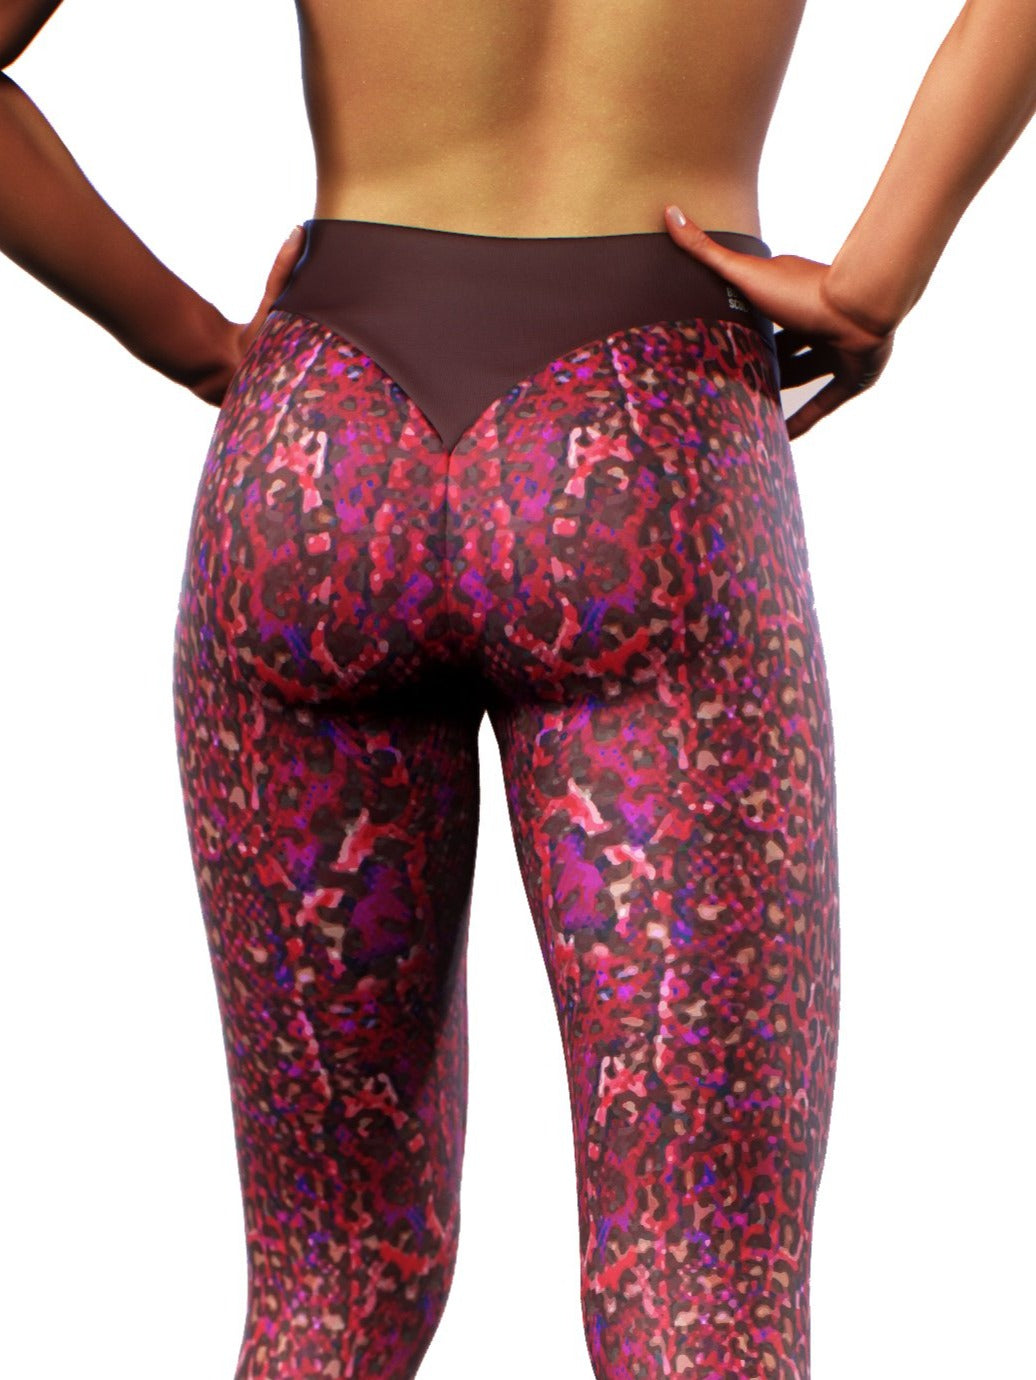 Soft Pink Leopard Leggings Big Cat Pattern Women Activewear Animal Print  Gym Apparel Fitness Clothing Sportswear Stretch Yoga Pants 